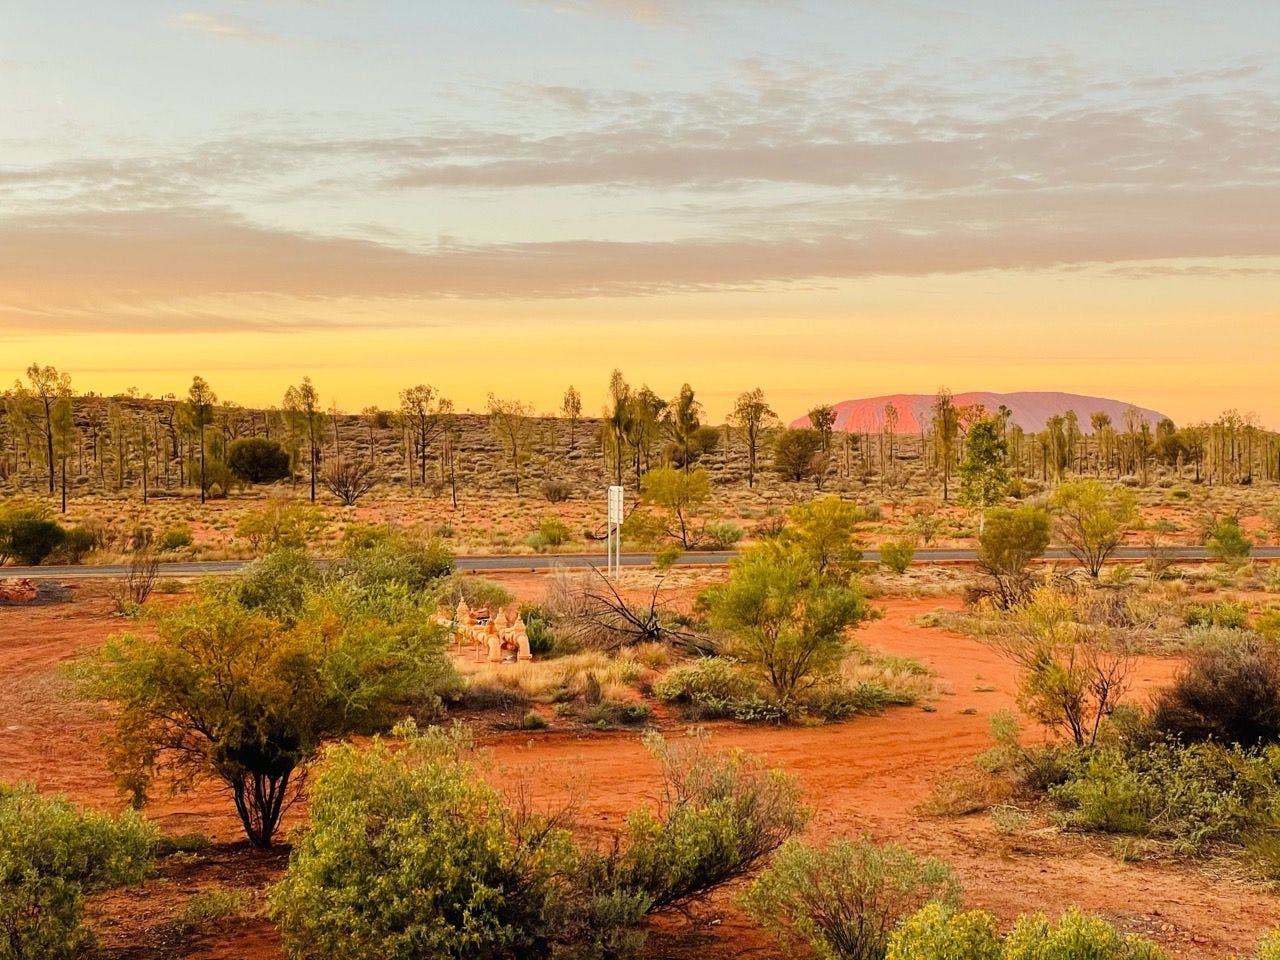 Mount Uluru in Australian desert